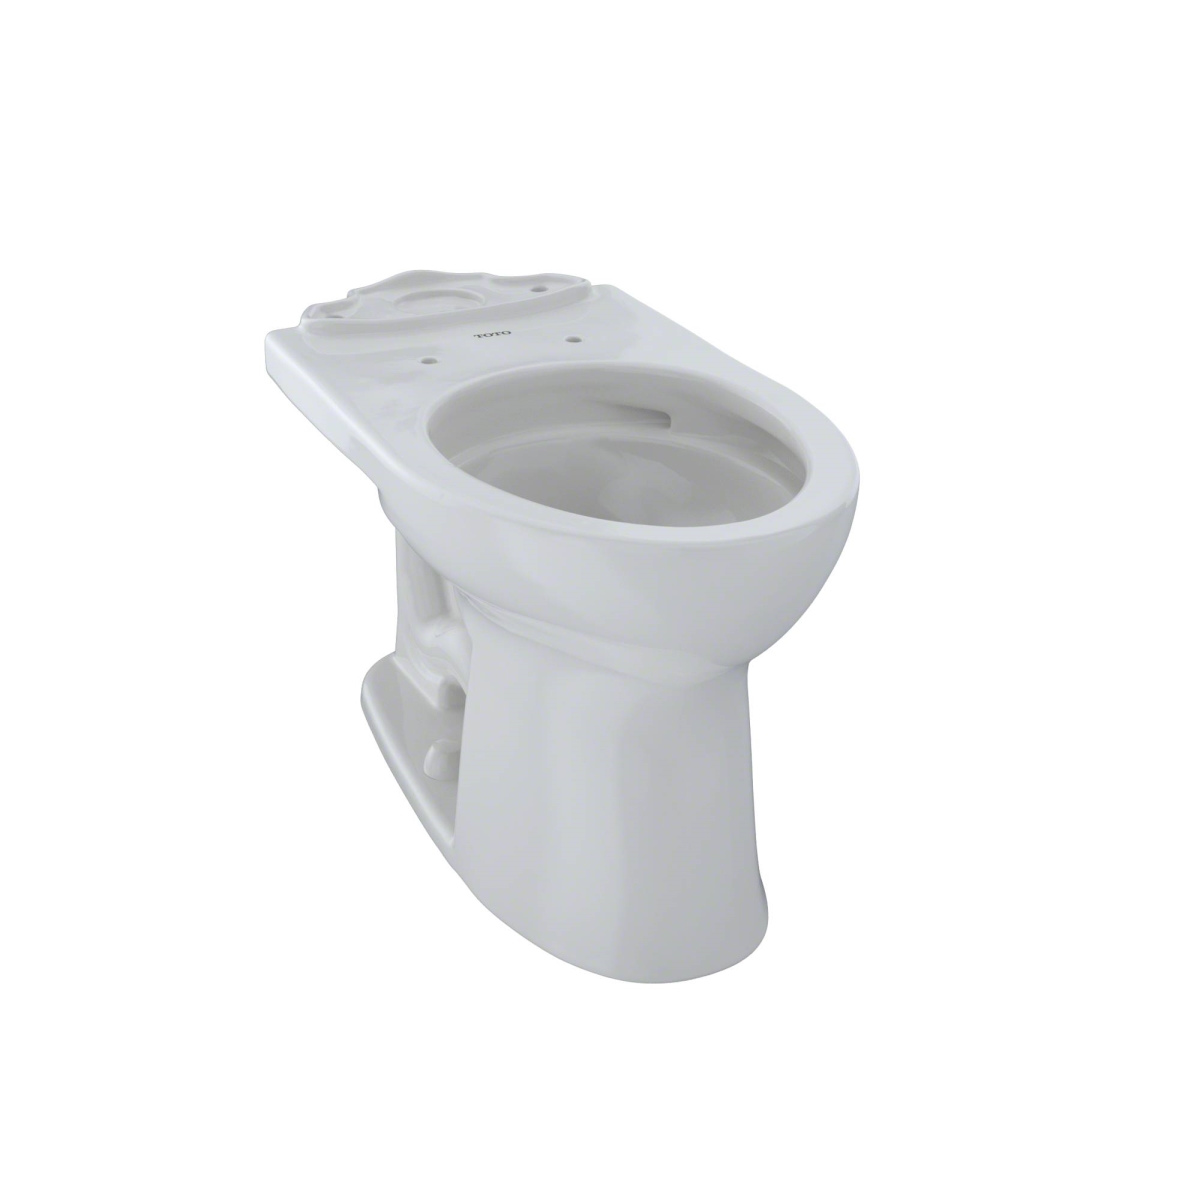 C454cufg-11 Drake Toilet Bowl, Colonial White - 2 Piece